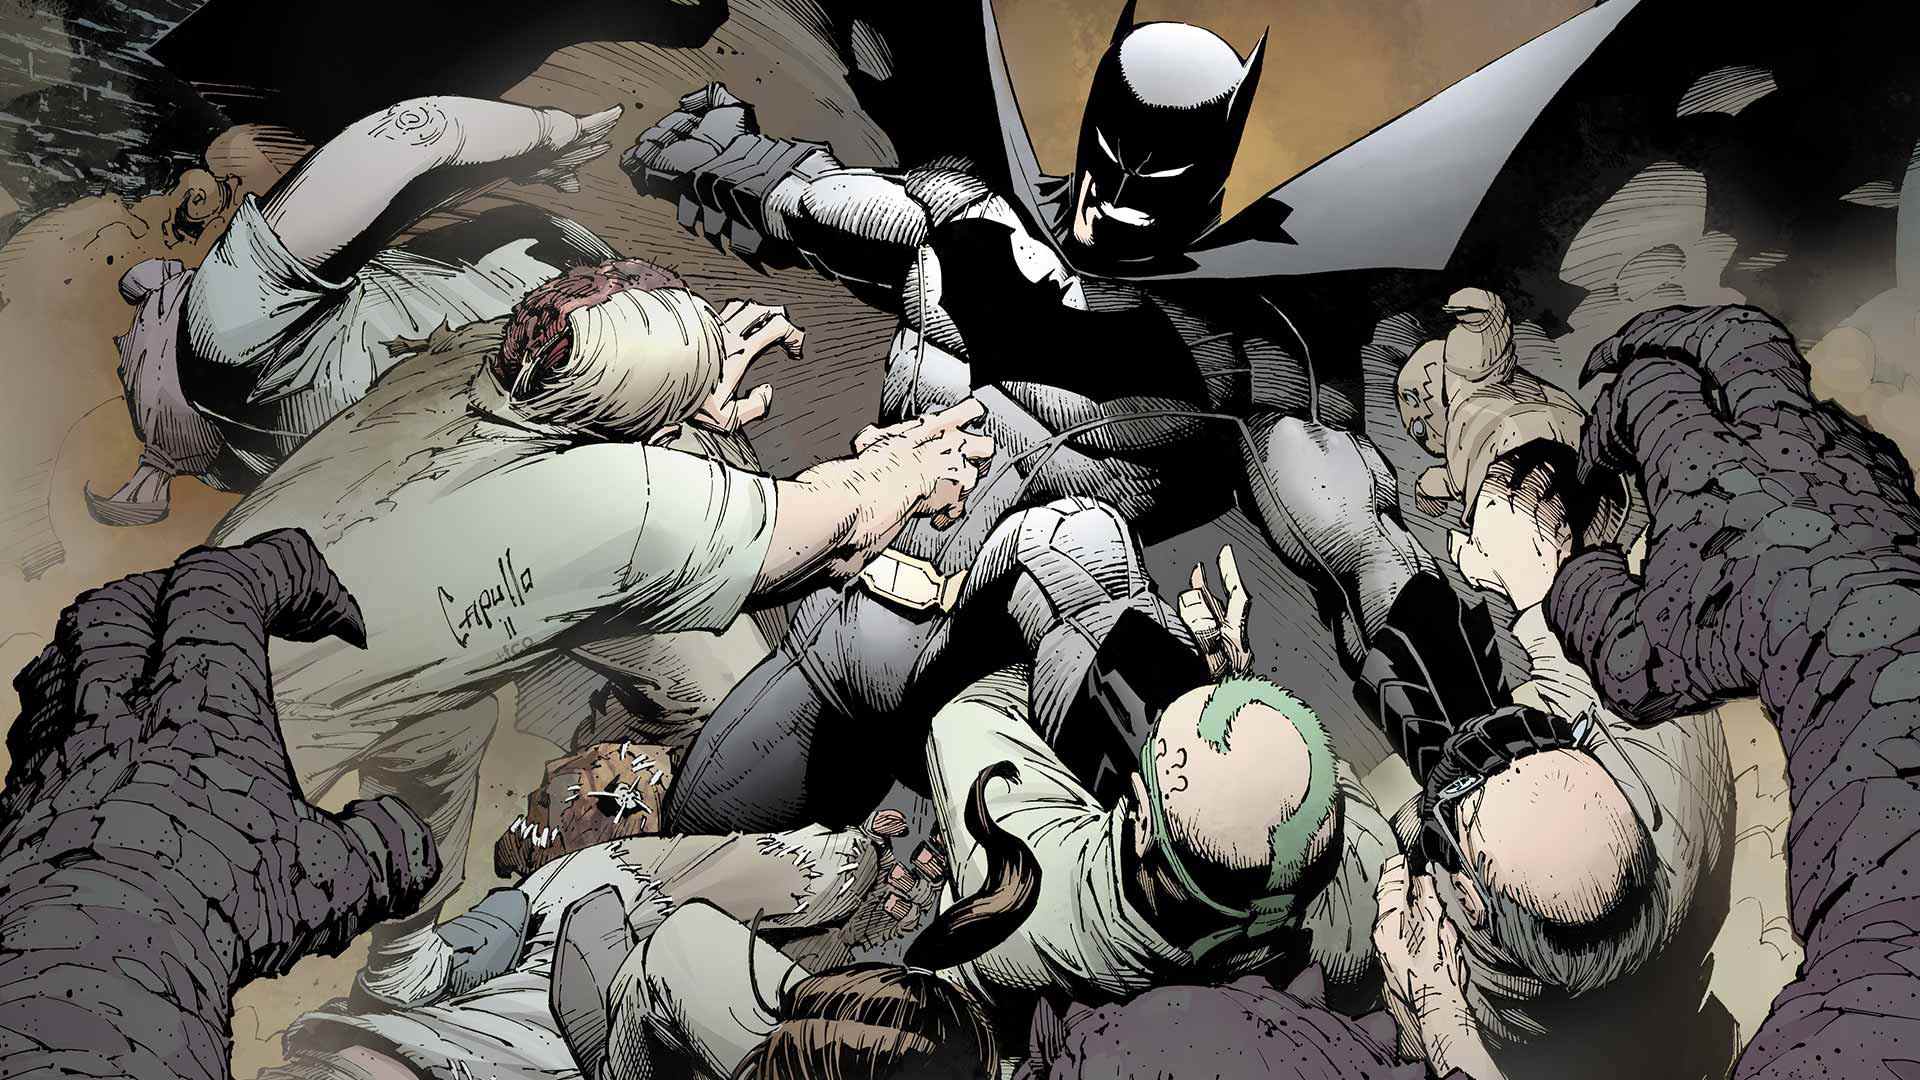 art de la couverture de Greg Capullo à Batman # 1 de 2011